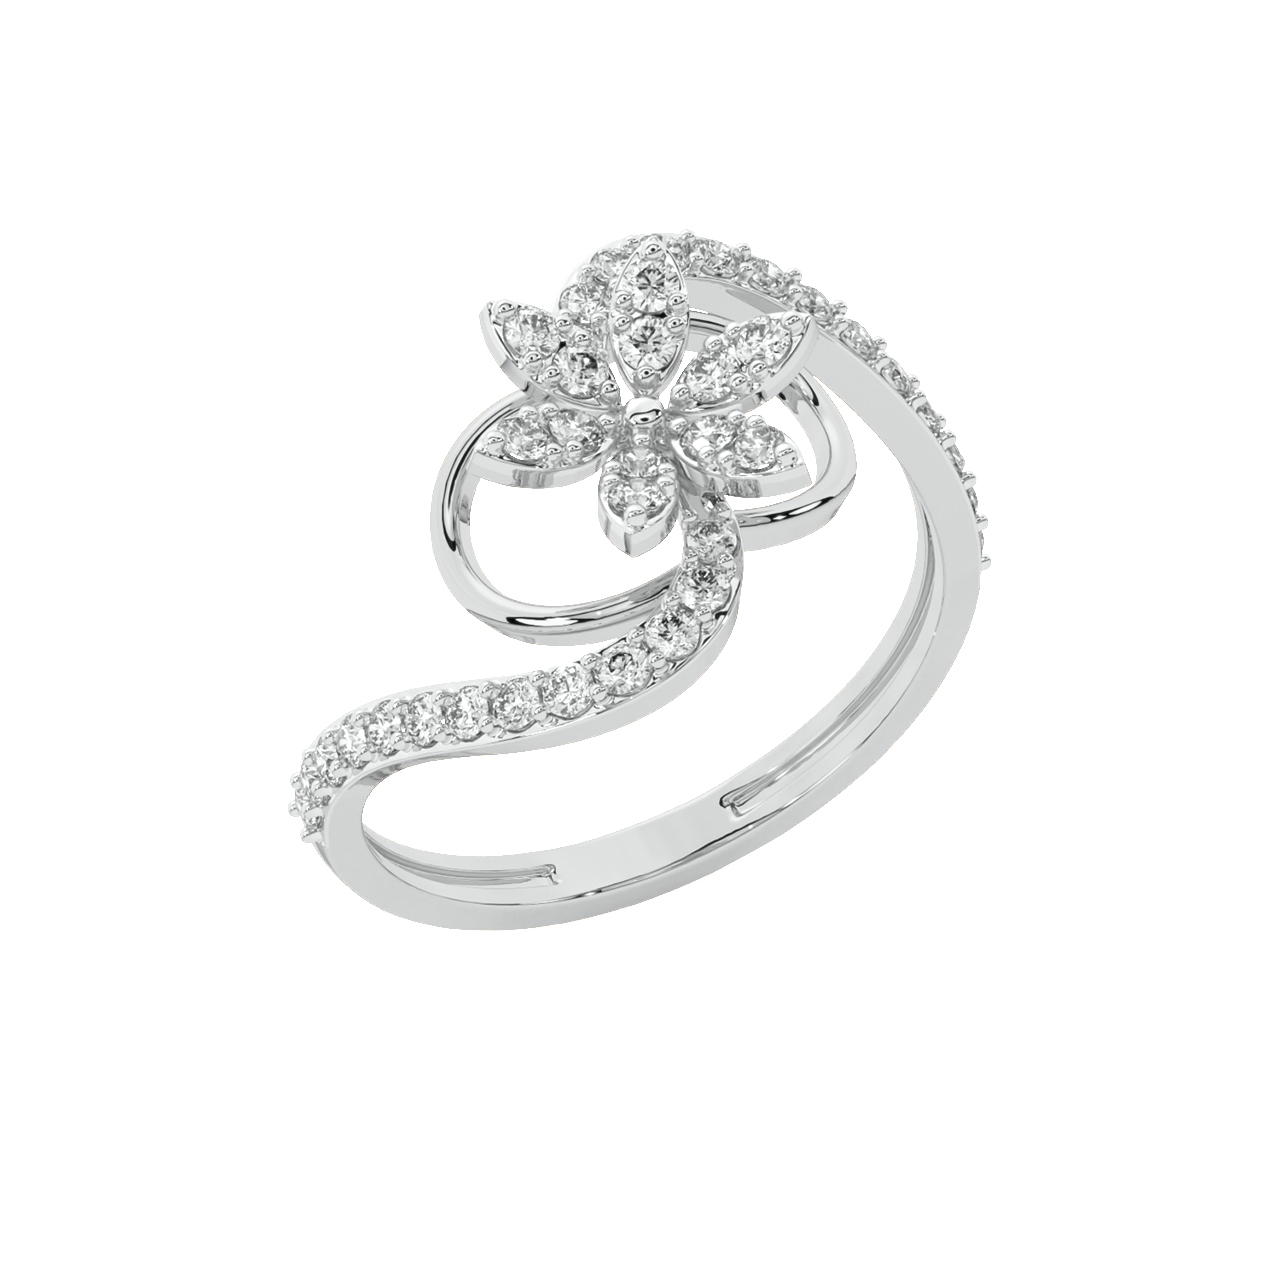 Aden Round Diamond Engagement Ring